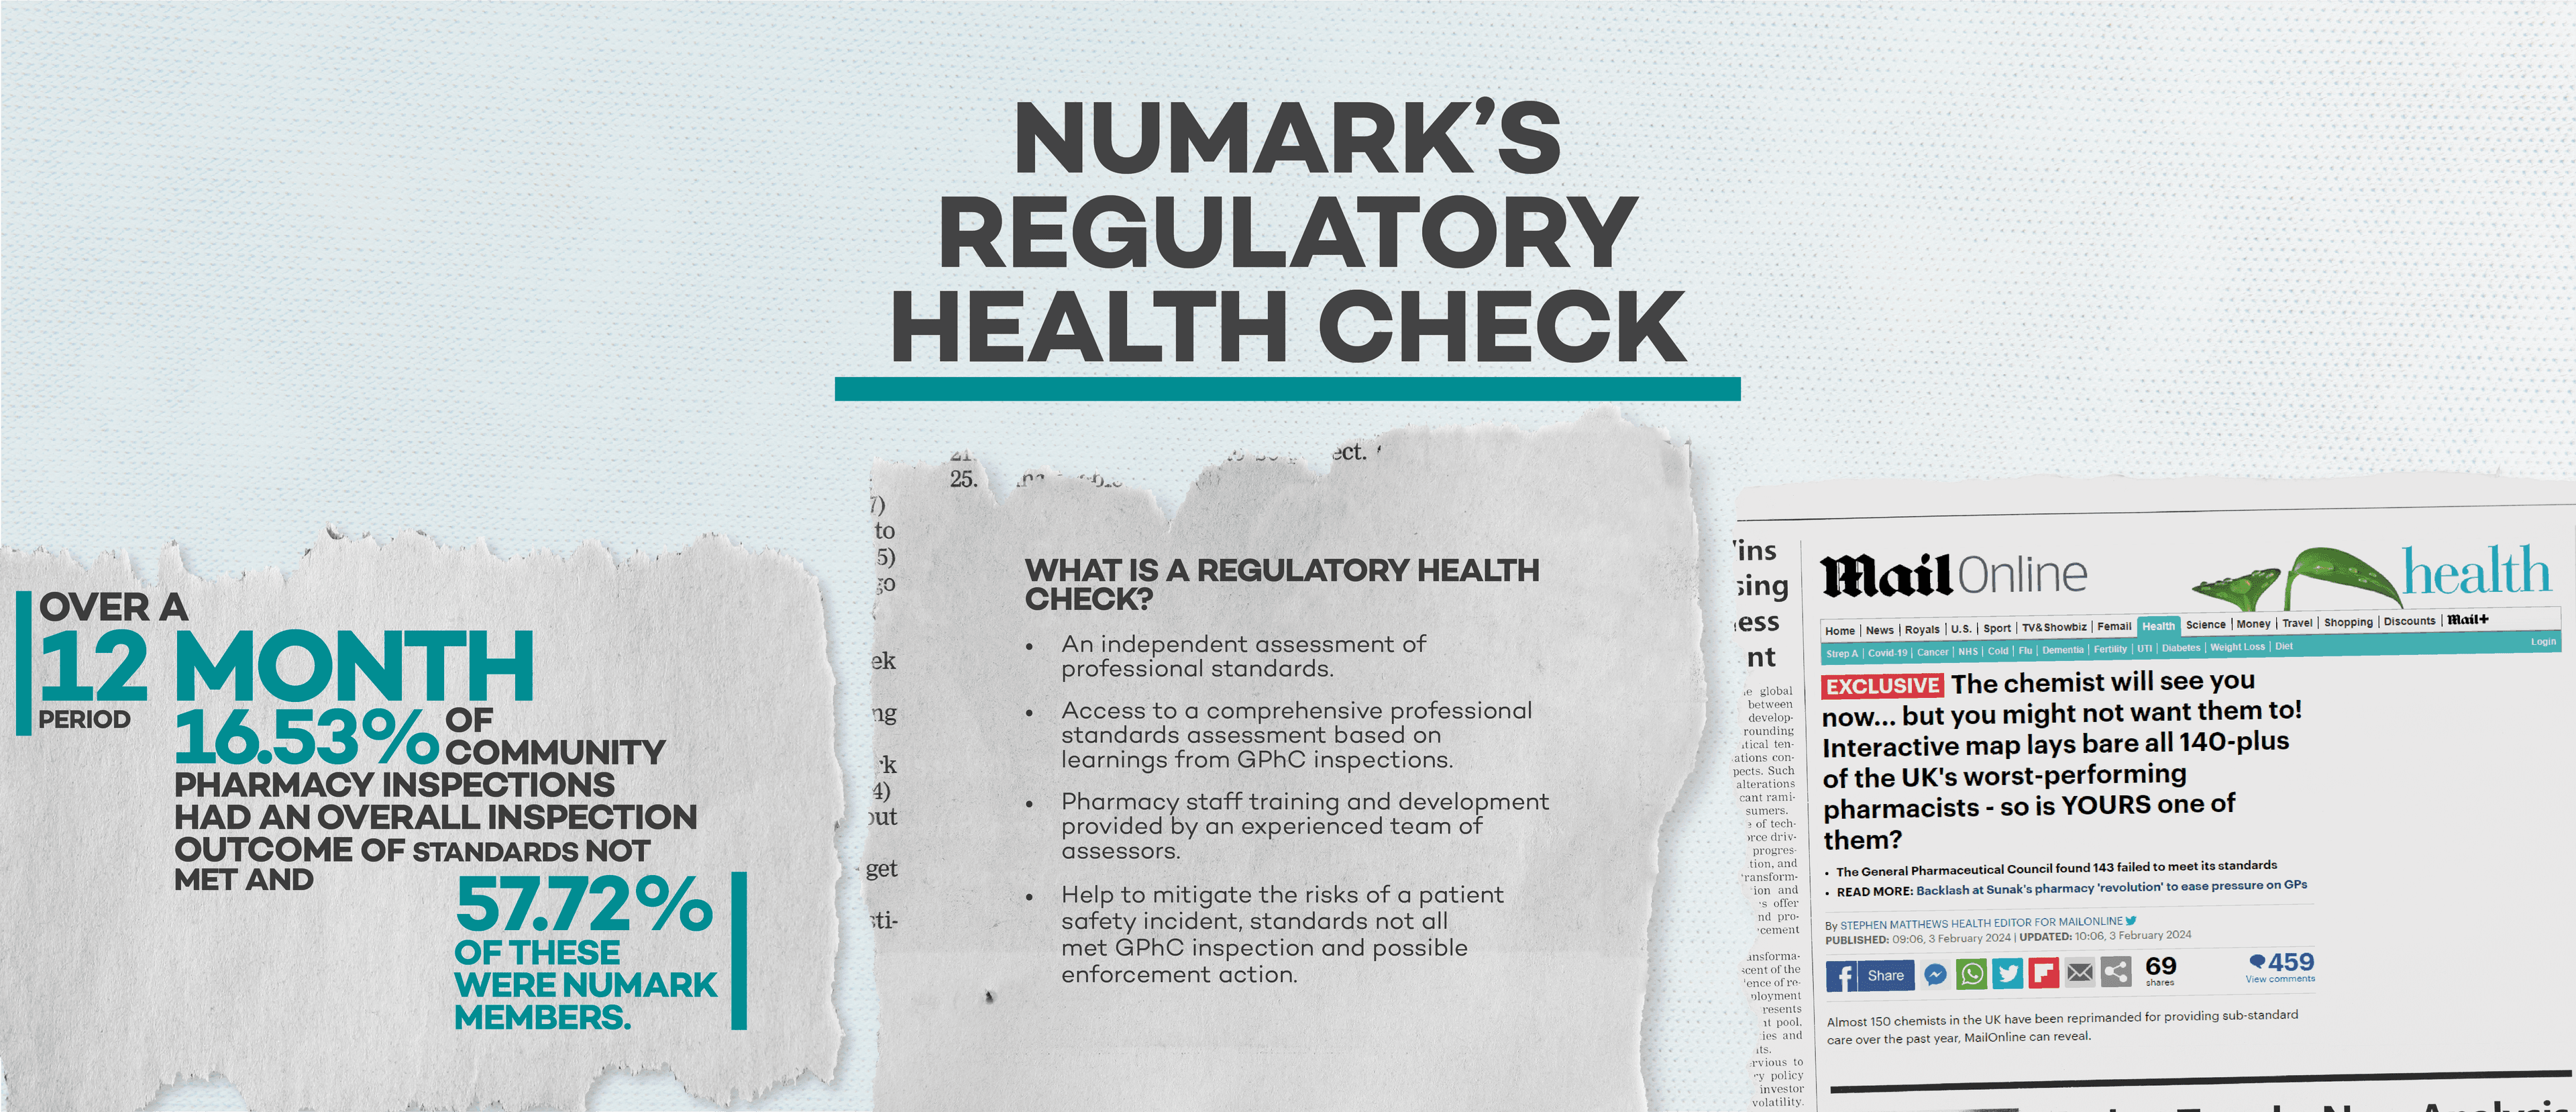 Numark's Regulatory Health Check